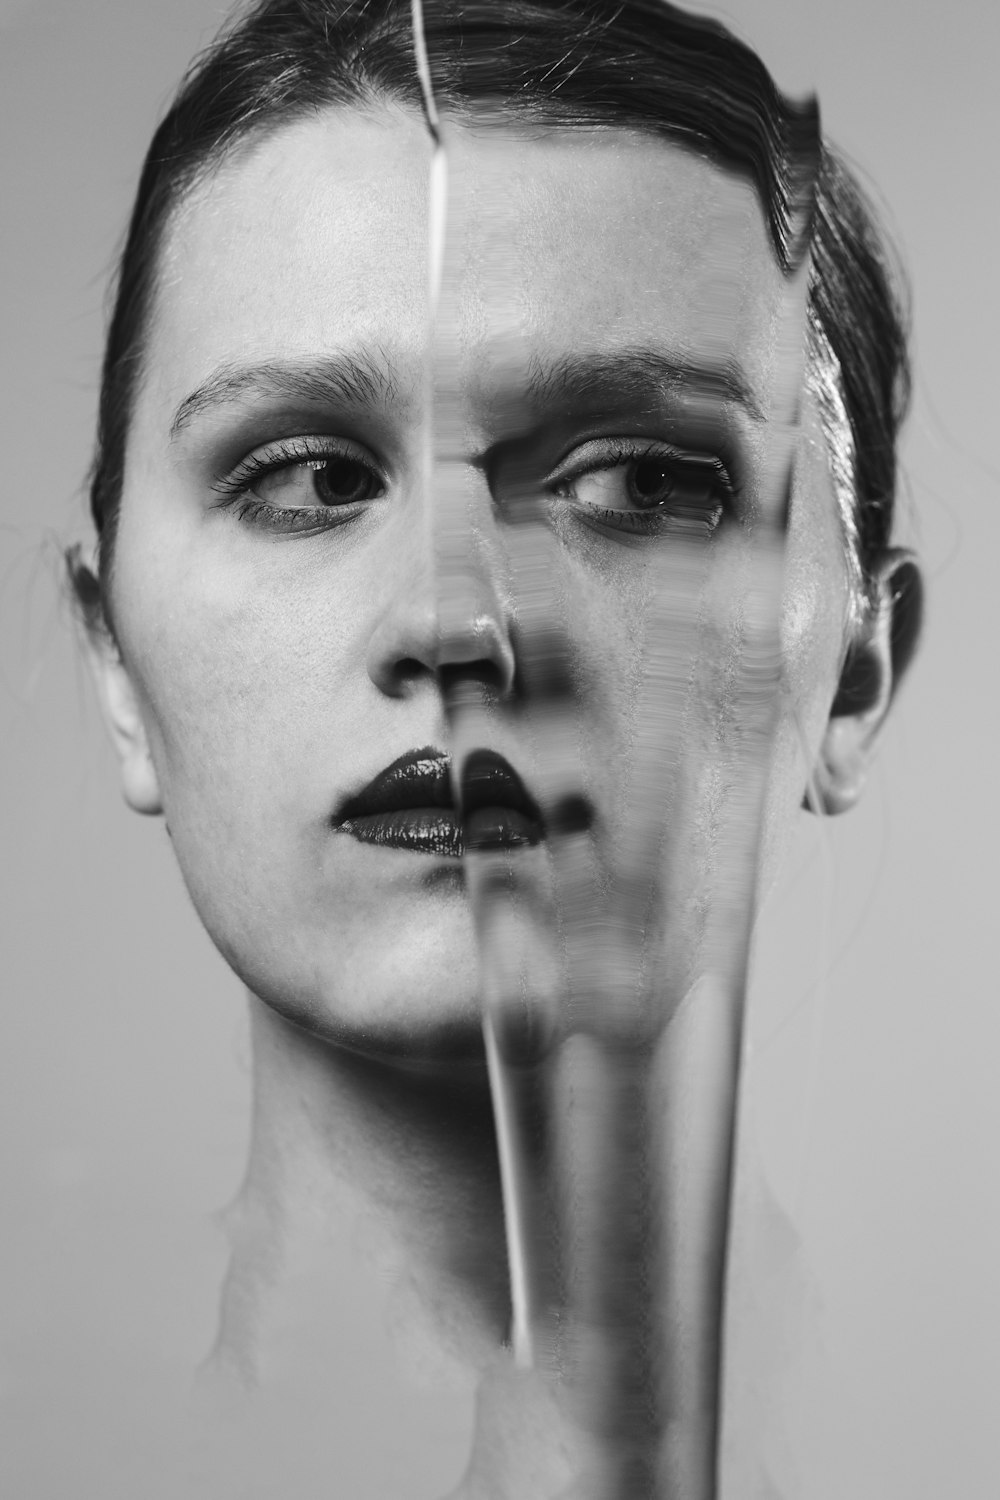 a woman's face is shown through a broken glass